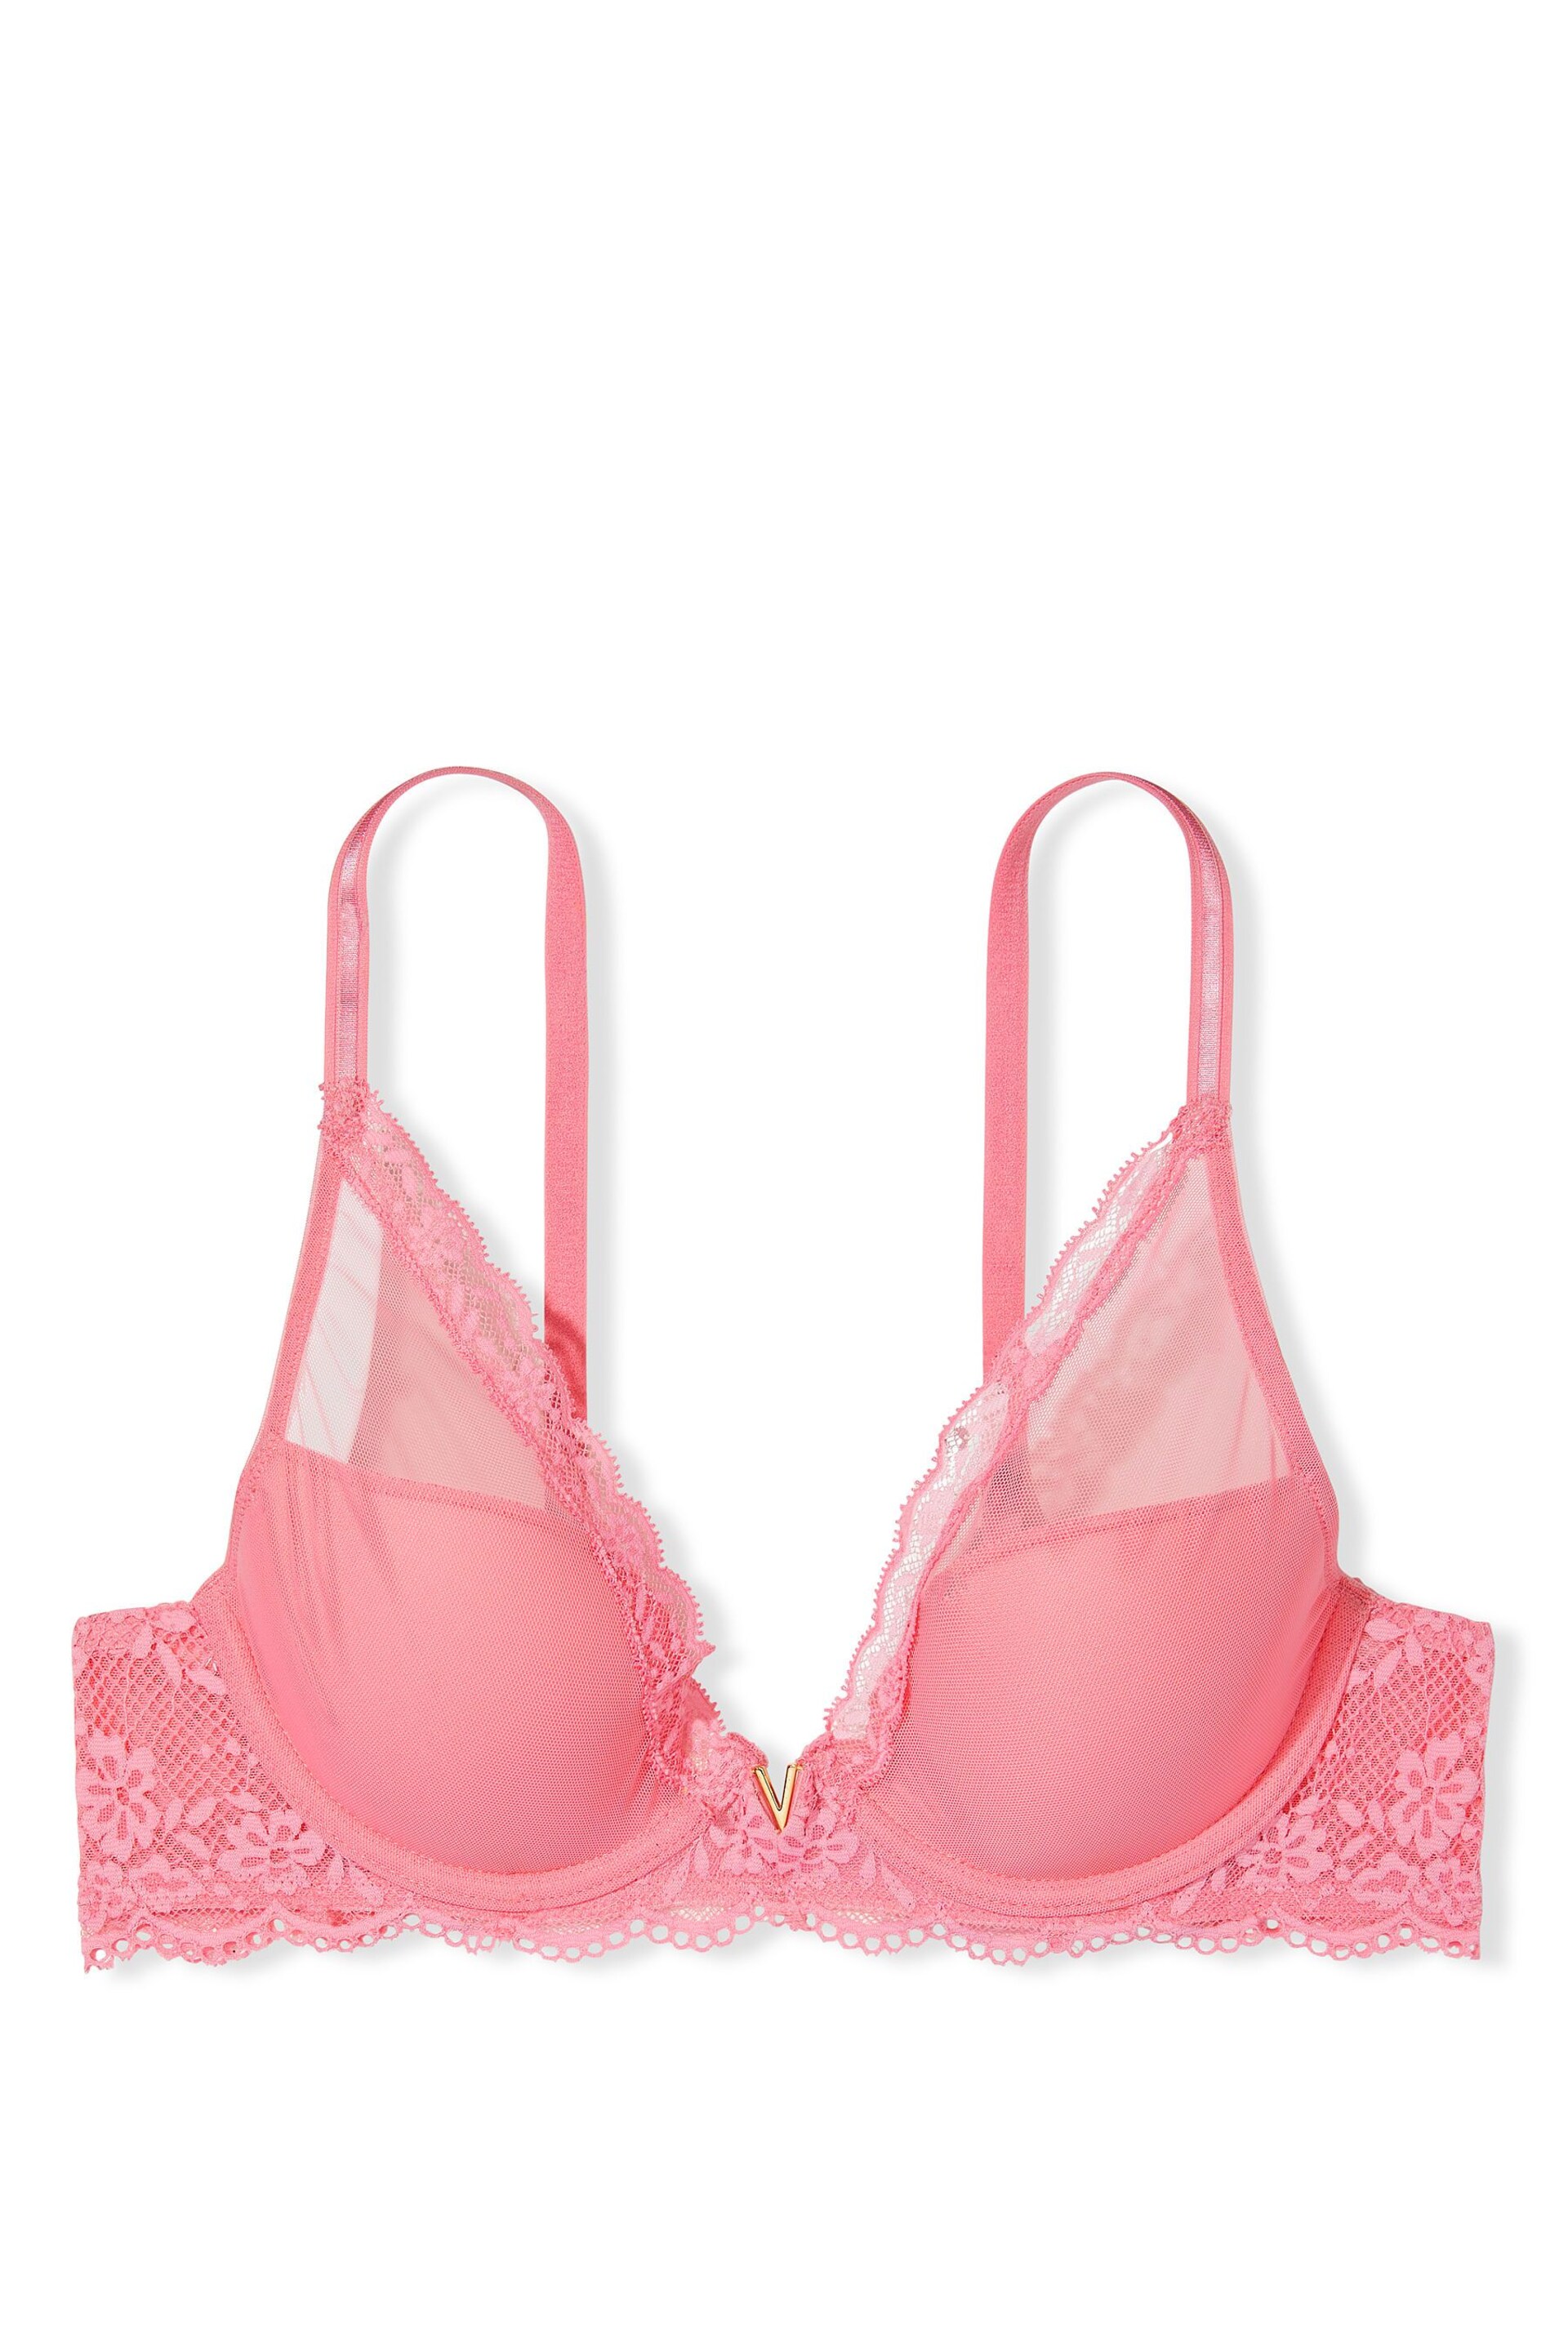 Victoria's Secret Pink Roses Mesh Half Pad Plunge Bra - Image 3 of 3